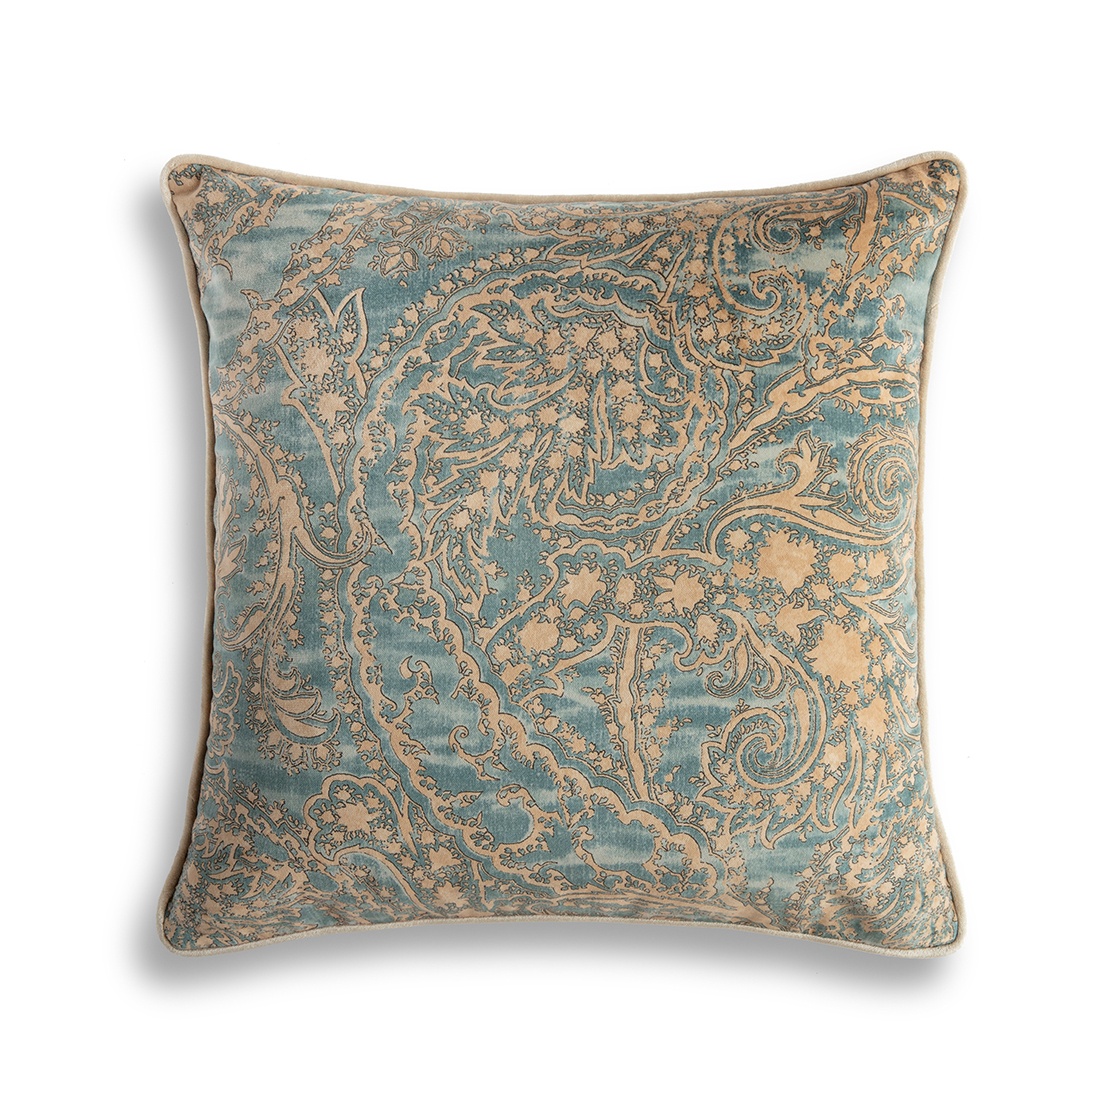 Balthazar cushion - Azure with a Como silk velvet back - Teal and Capri silk velvet piping - Stone - Beaumont & Fletcher